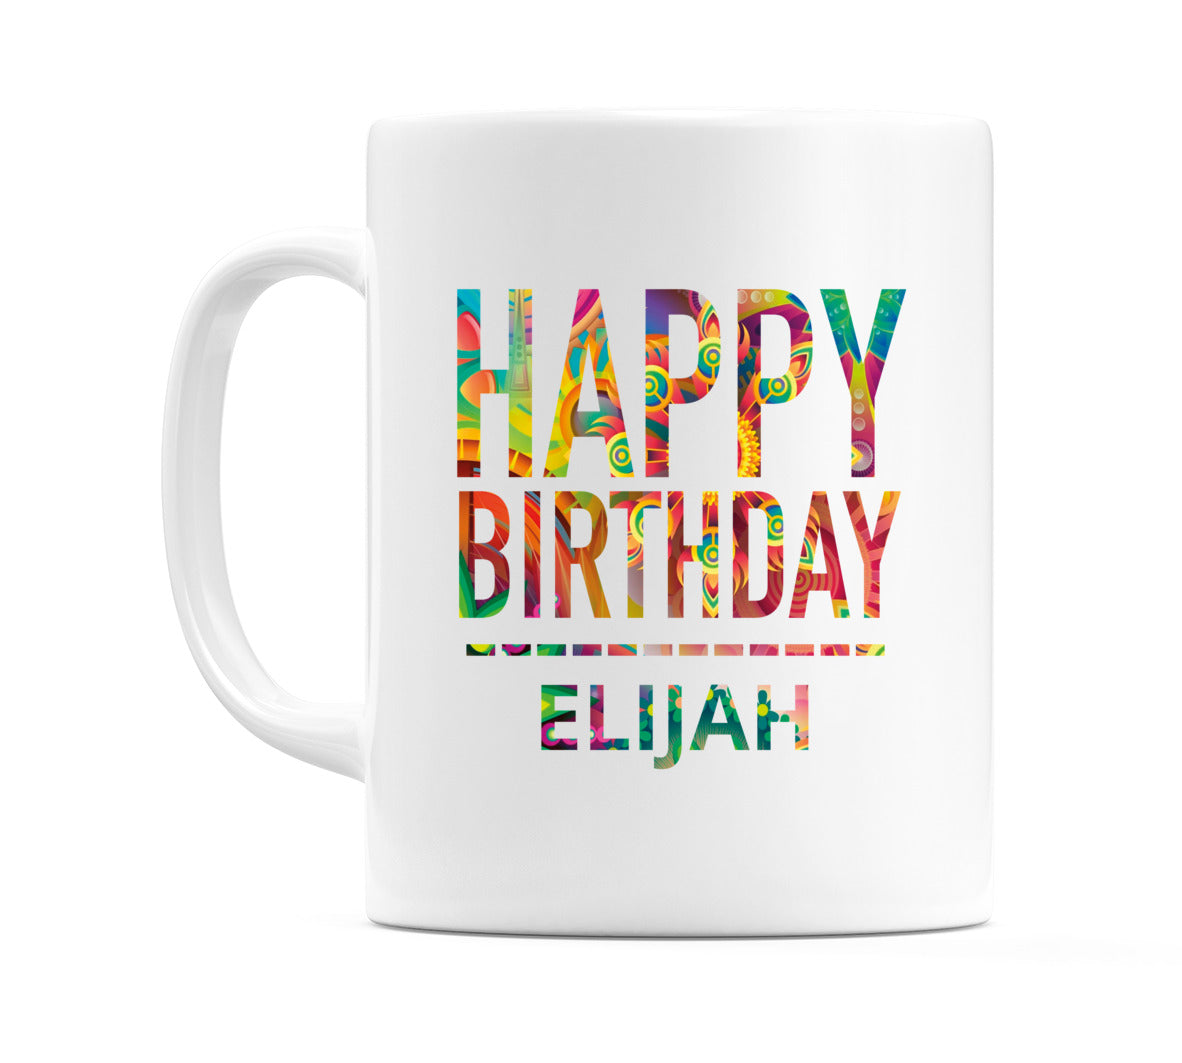 Happy Birthday Elijah (Tie Dye Effect) Mug Cup by WeDoMugs